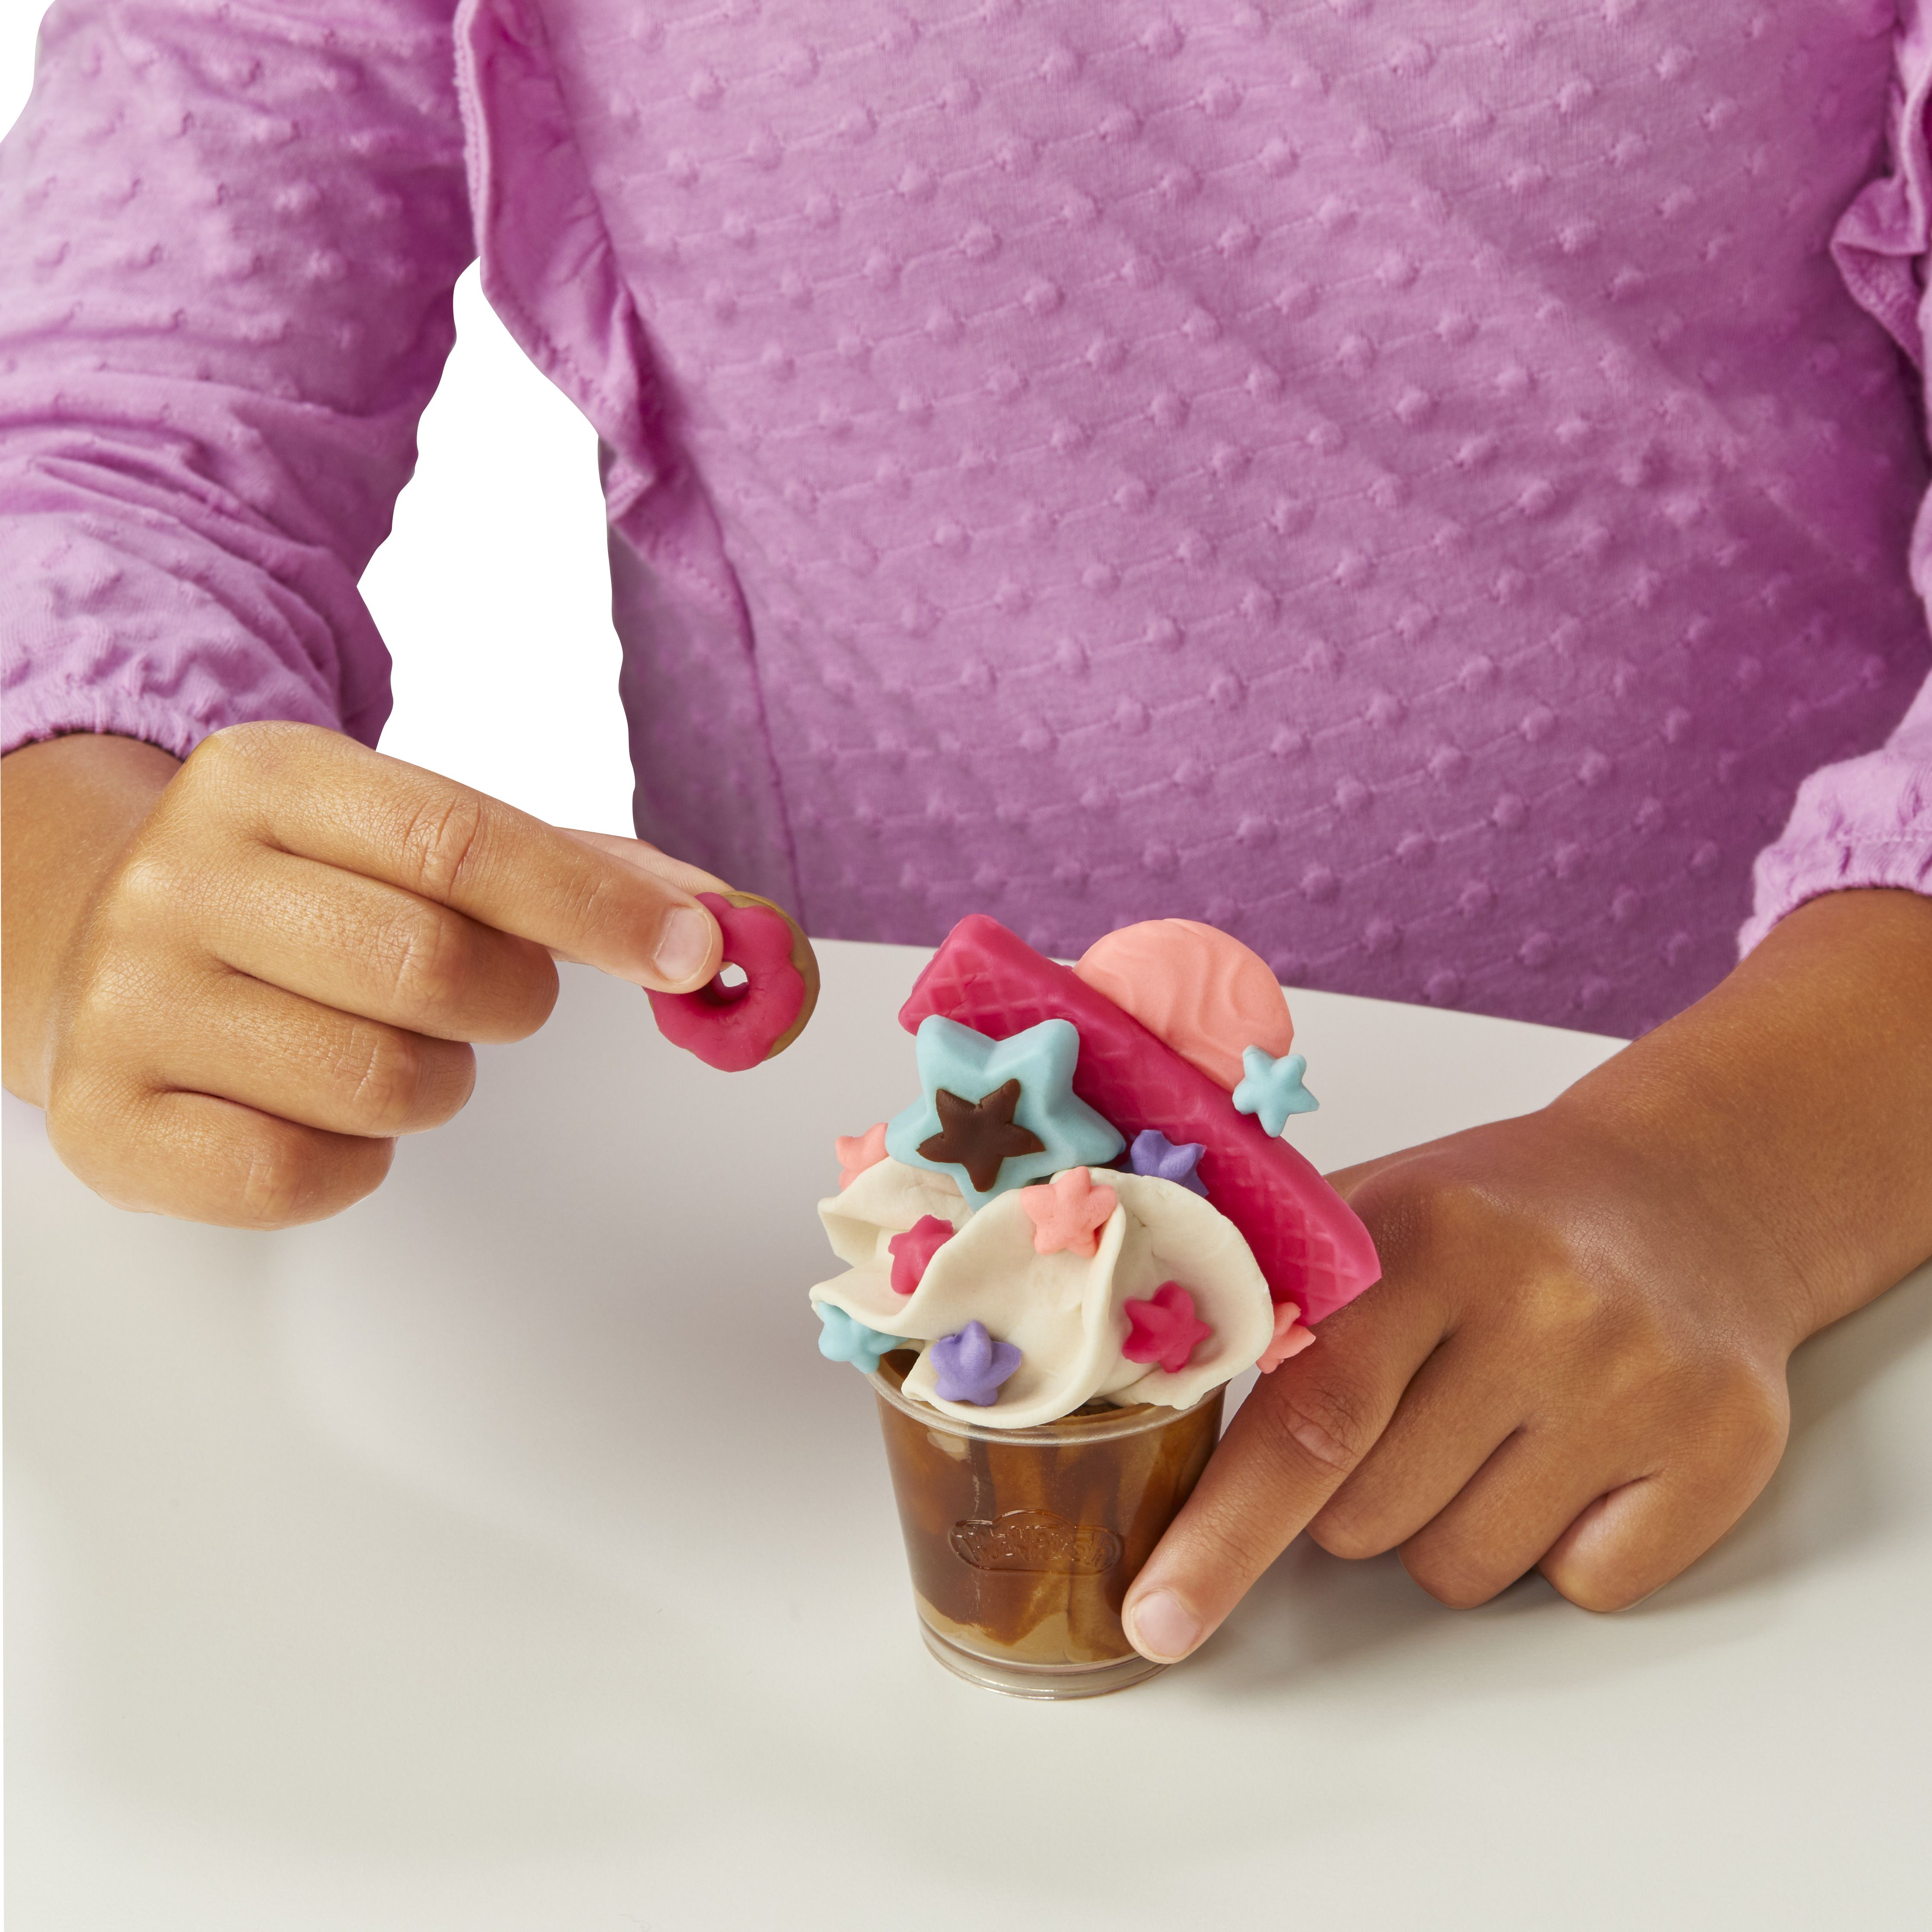 Spielset, Play-Doh Knetspaß Mehrfarbig HASBRO Café GAMING